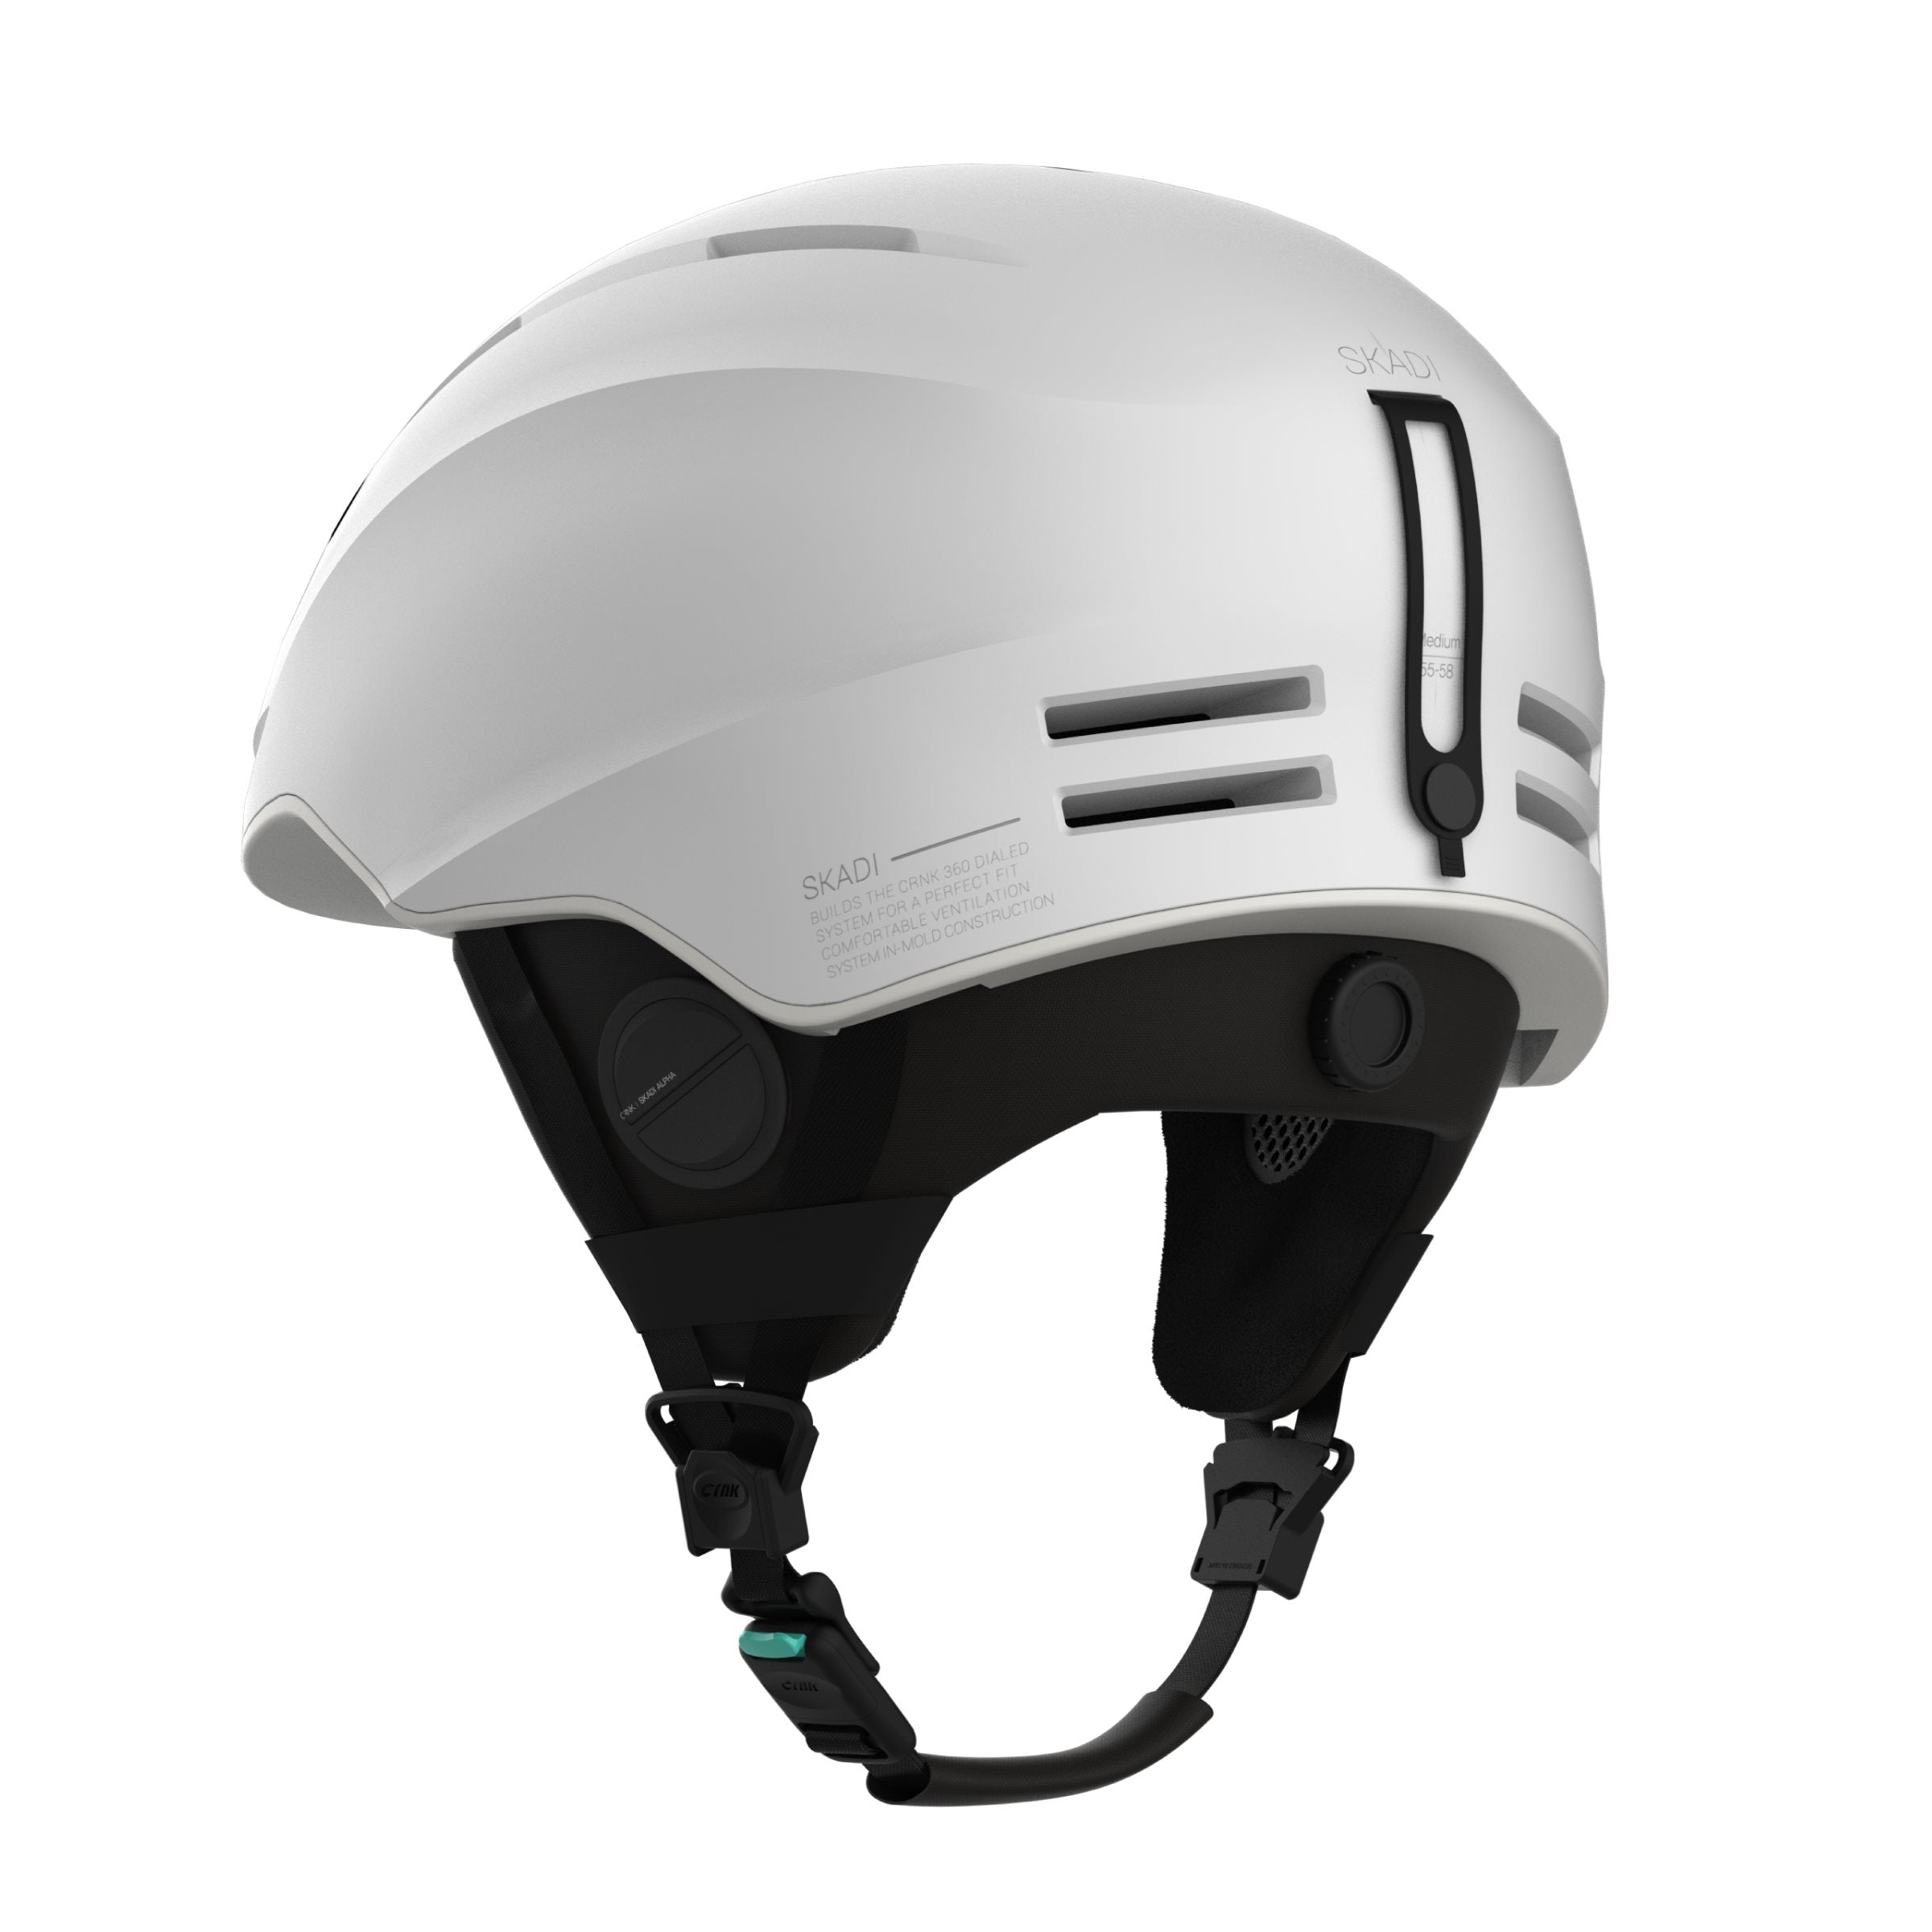 Skadi Alpha Bluetooth Ski Helmet - Unisex - With Speakers and Microphone - White